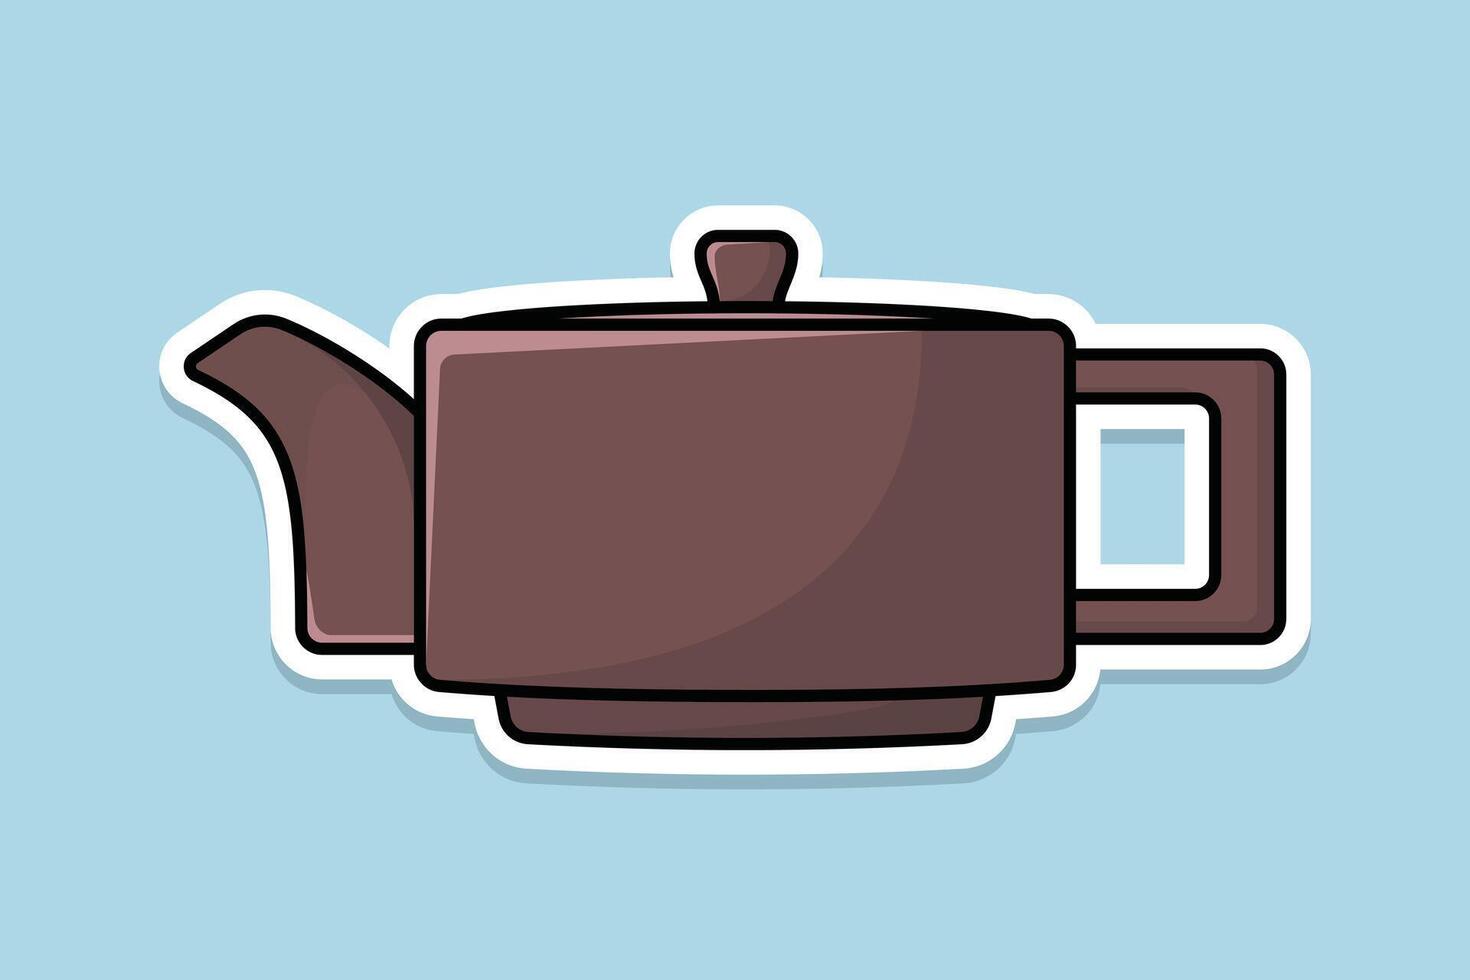 Brown Teapot sticker design vector illustration. Kitchen interior object icon concept. Breakfast Teapot with closed lid sticker design on blue background. Restaurant kettle icon logo.